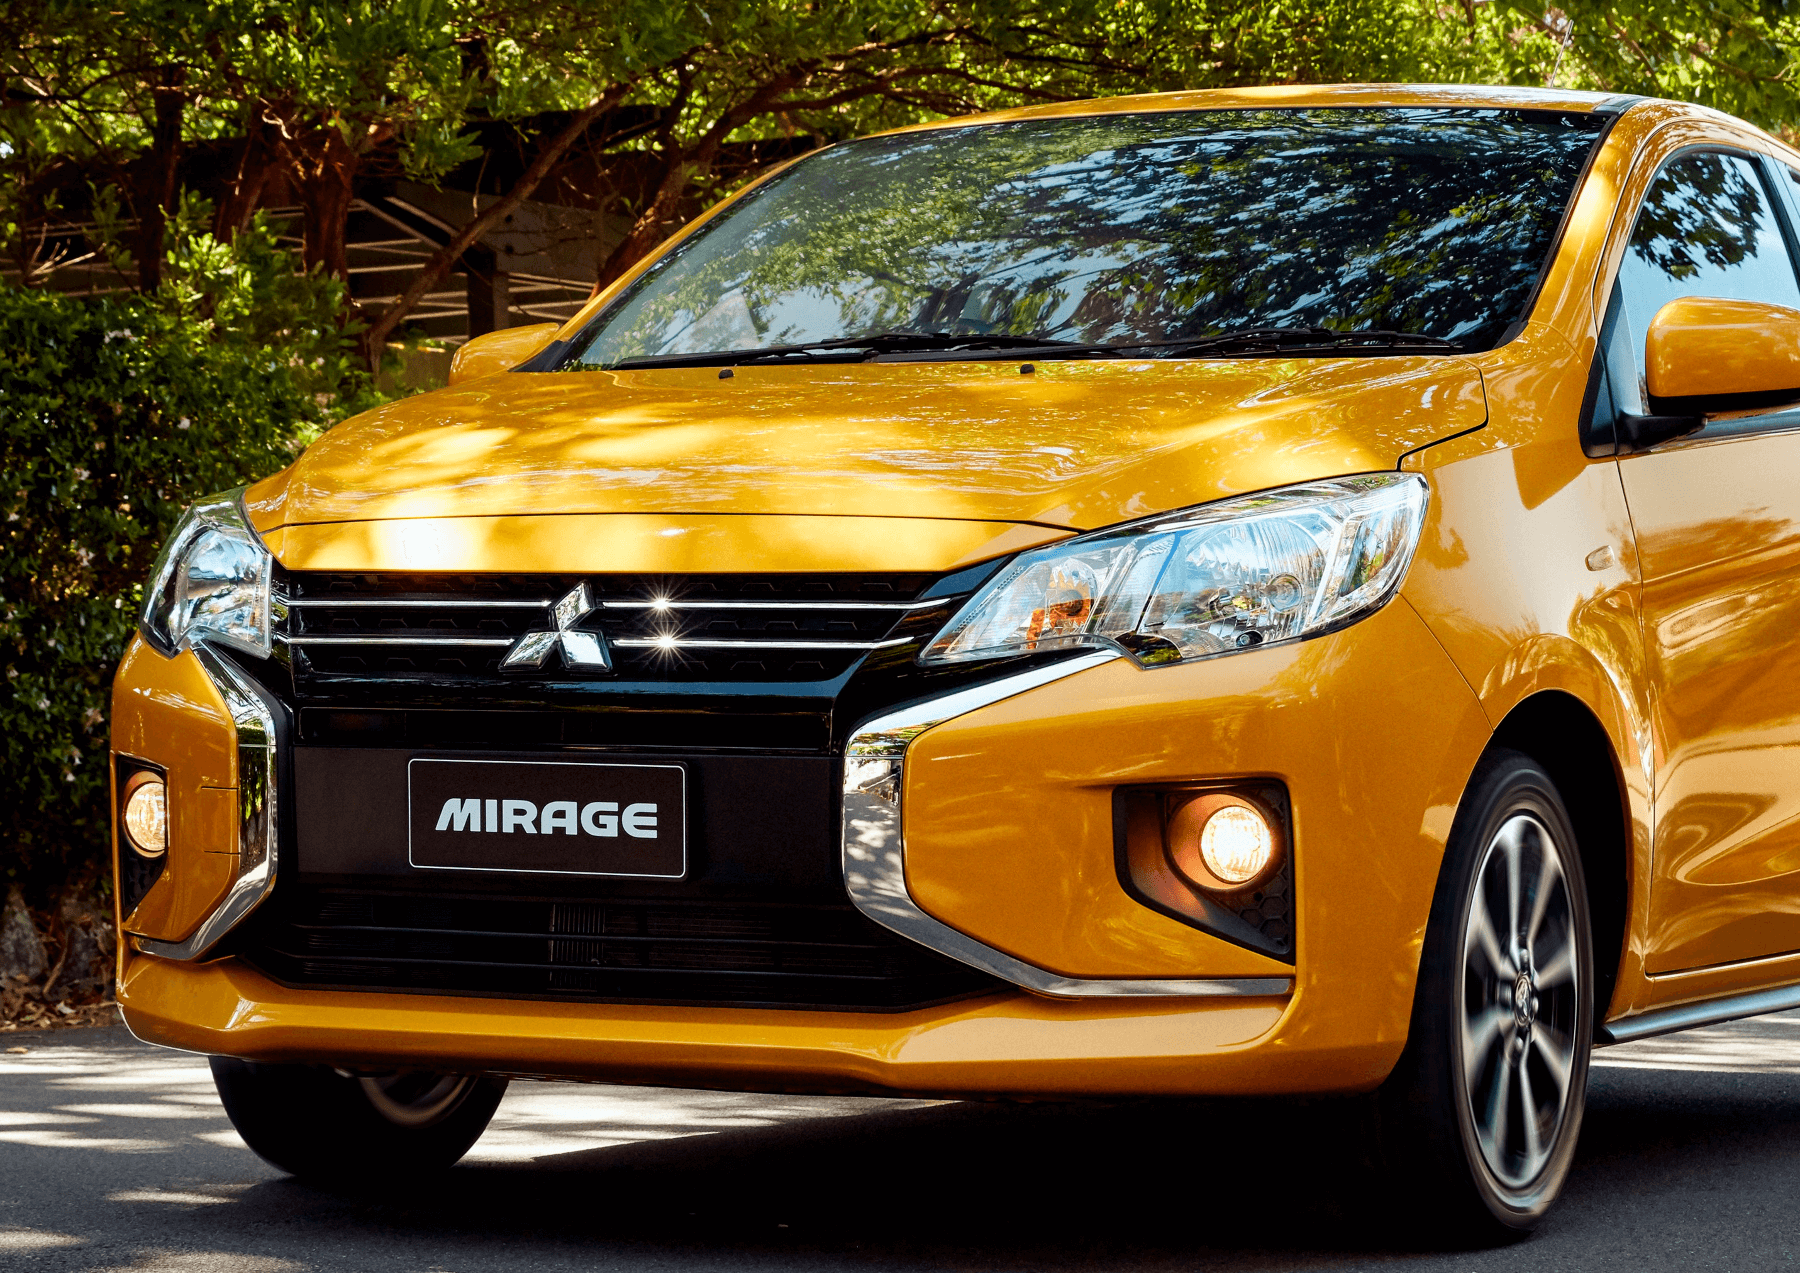 Shot of the front of a yellow Mitsubishi Mirage at park